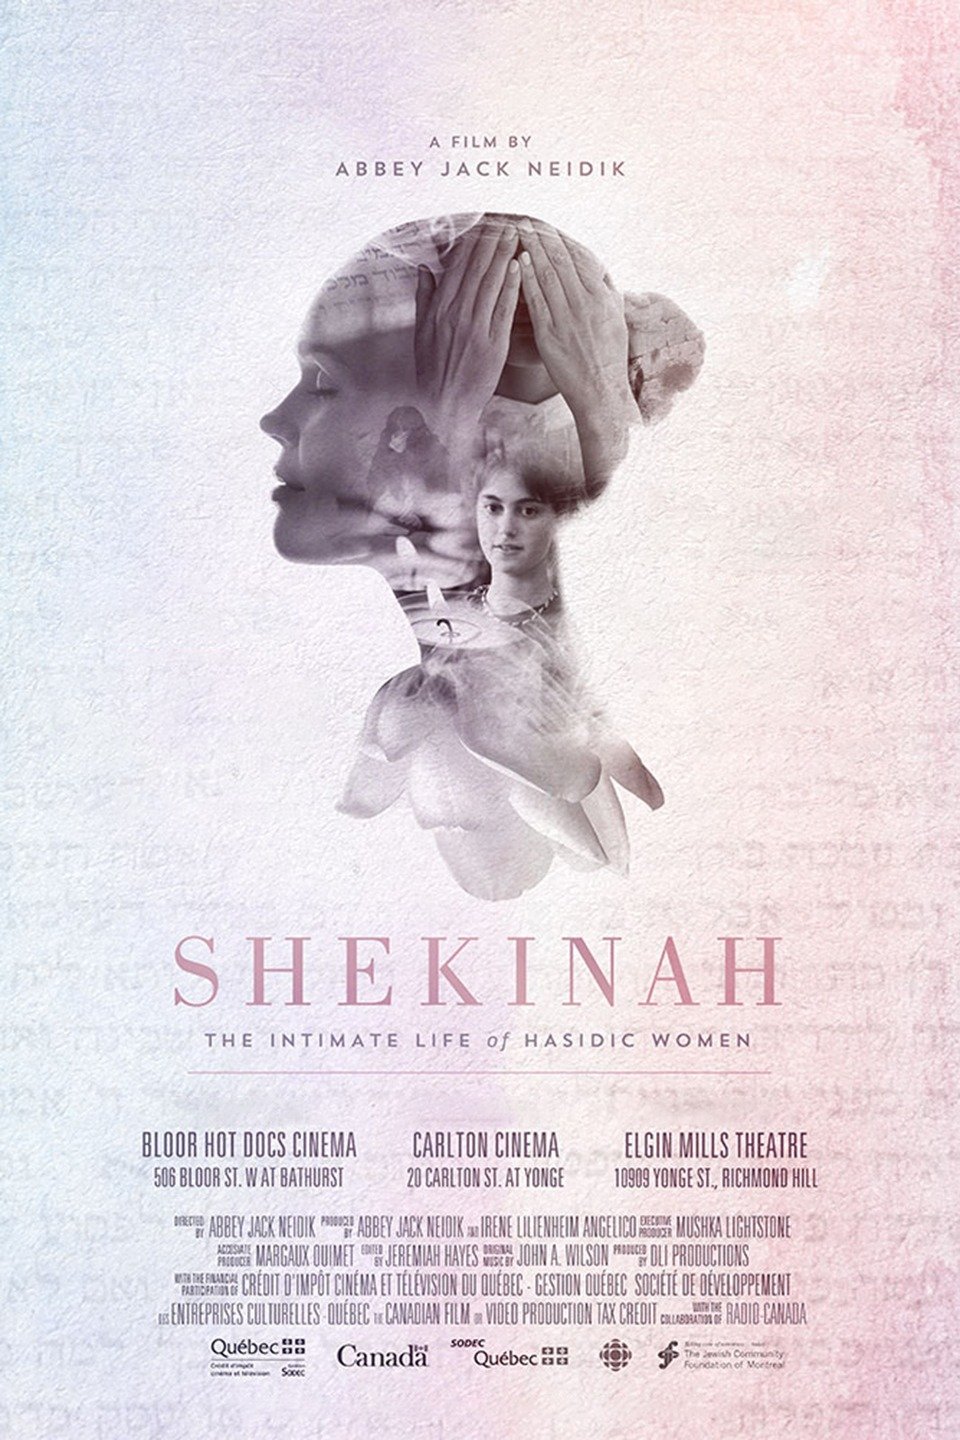 Shekinah The Intimate Life of Hasidic Women picture image pic